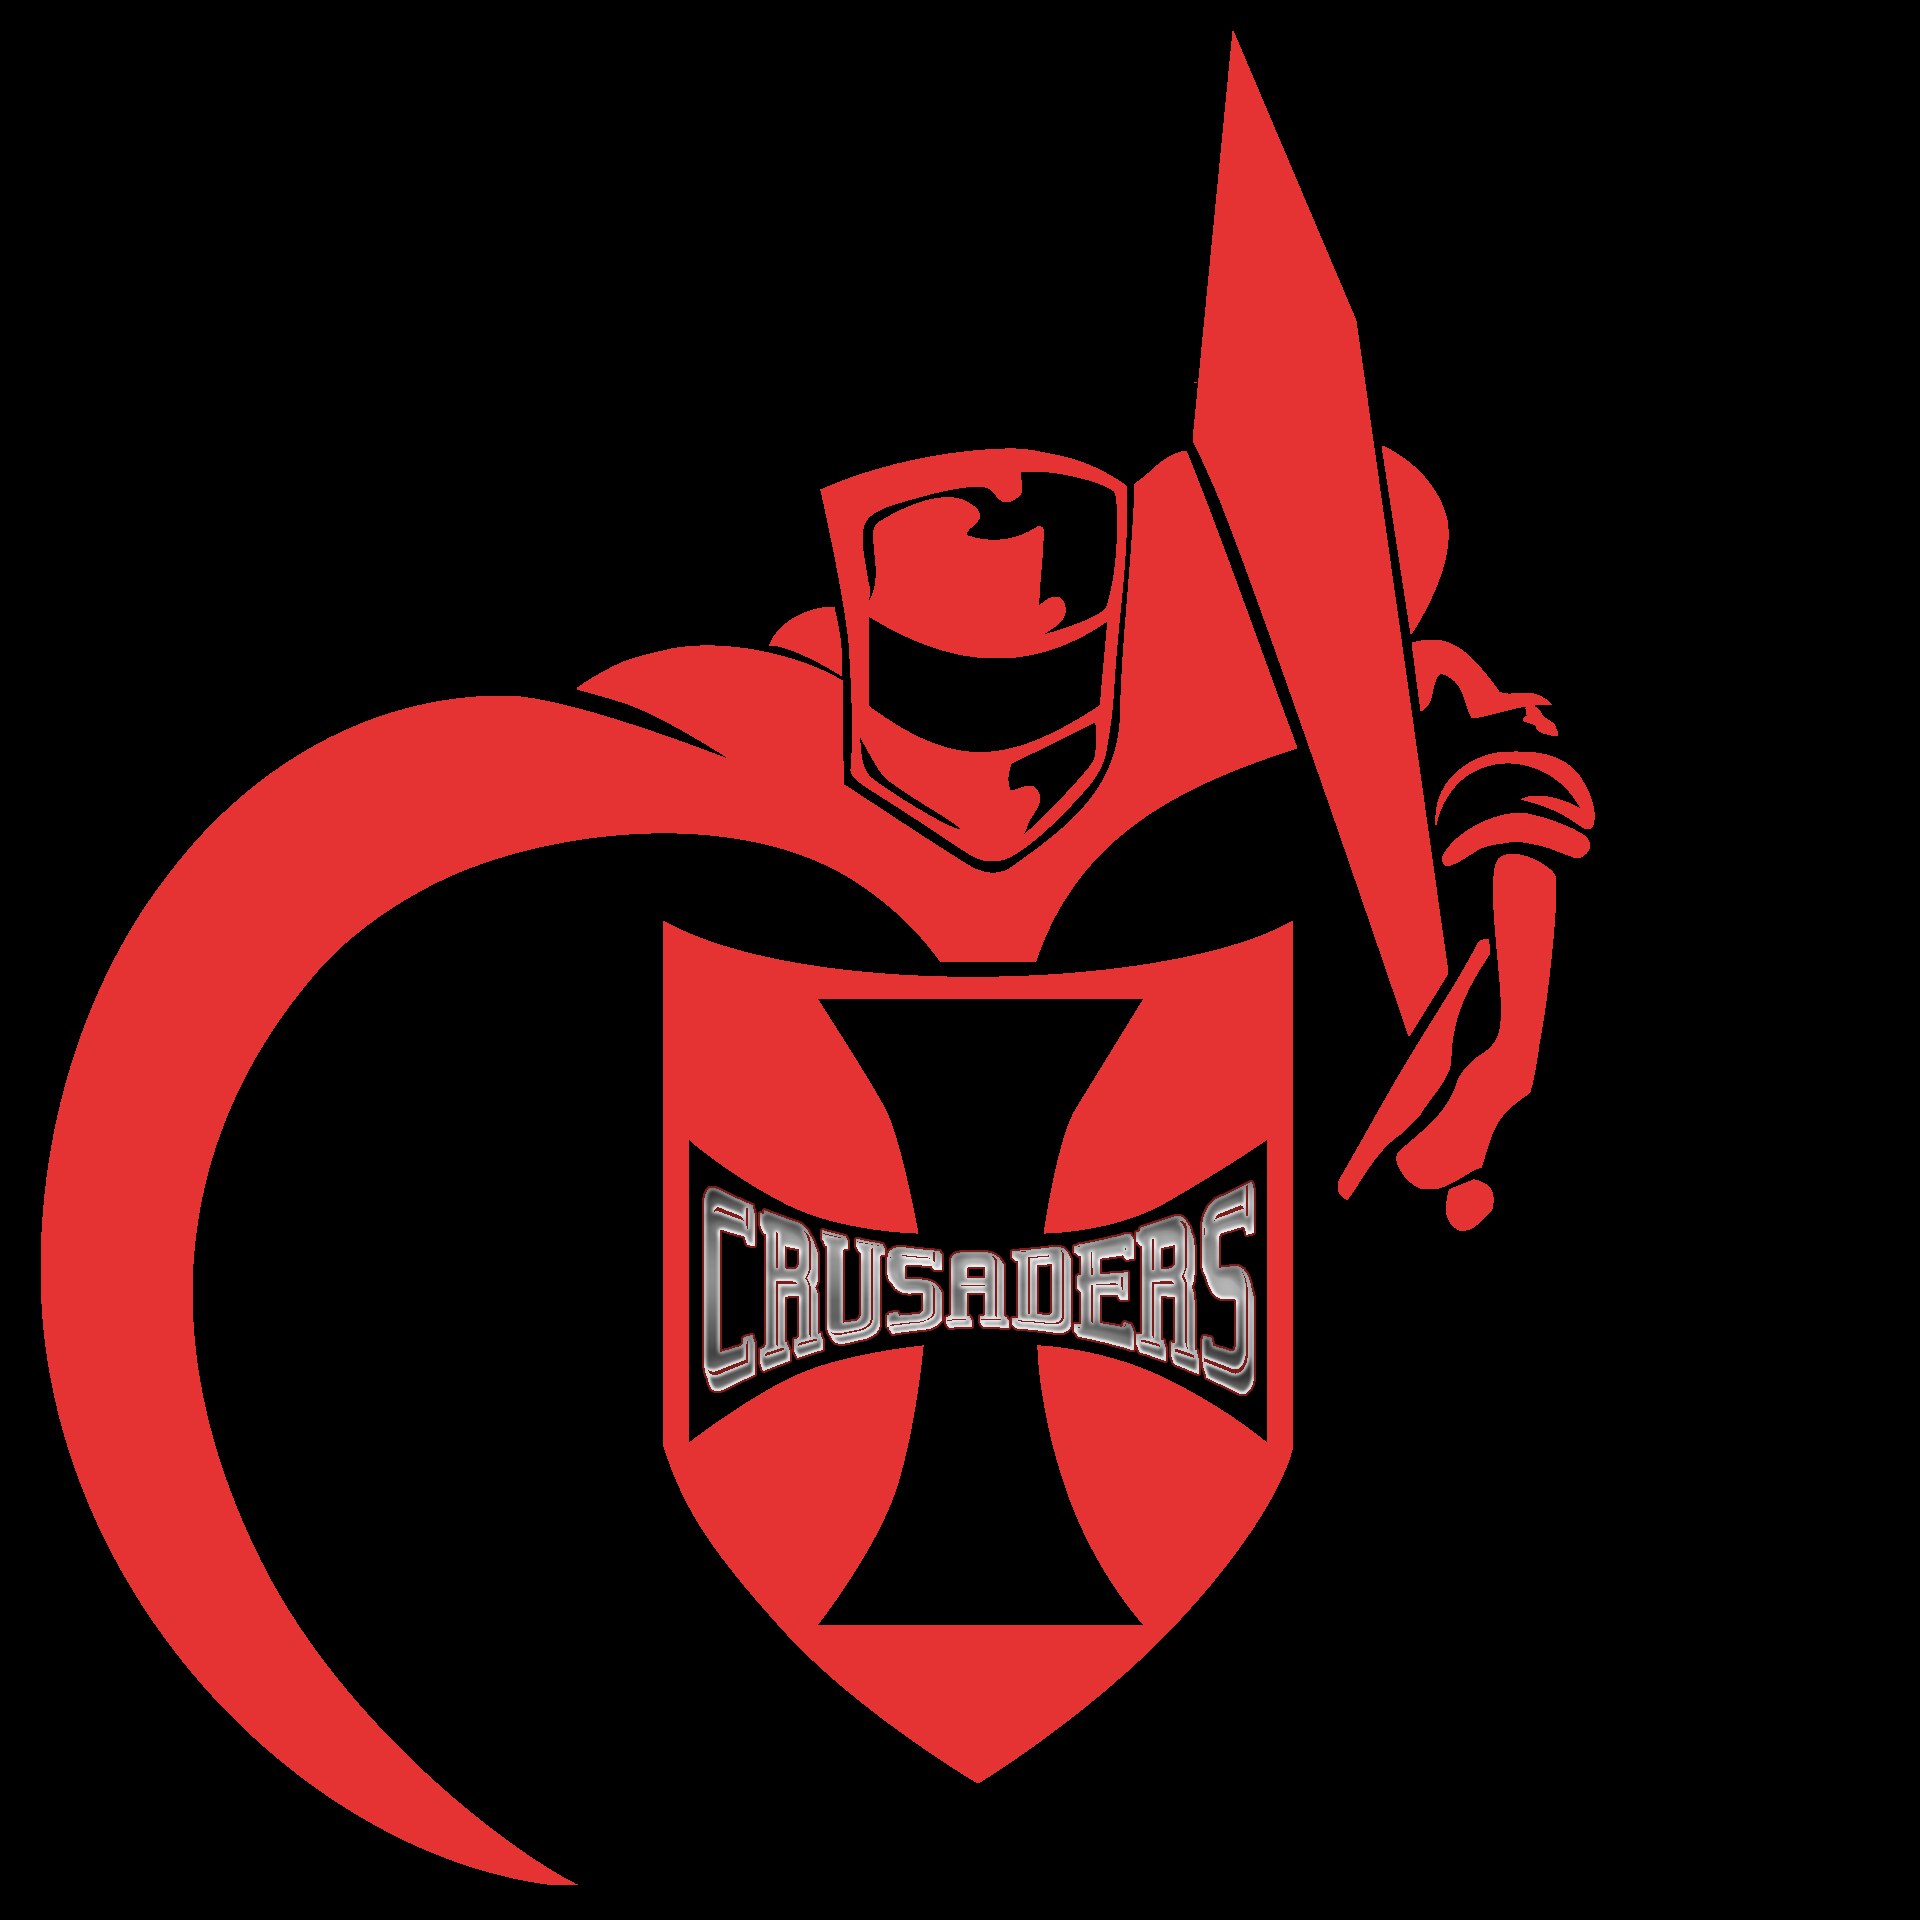 crusader rugby logo